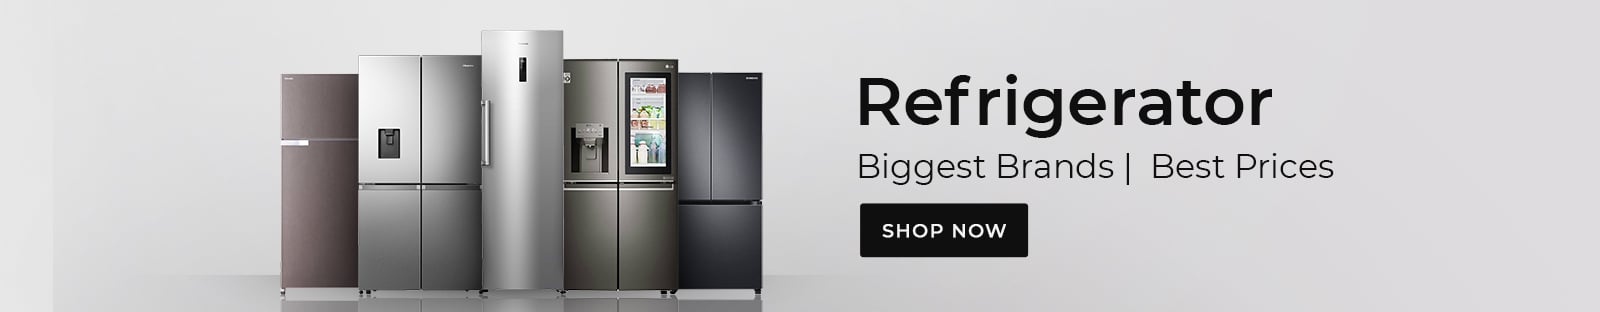 Refrigerator-1600x312.jpg